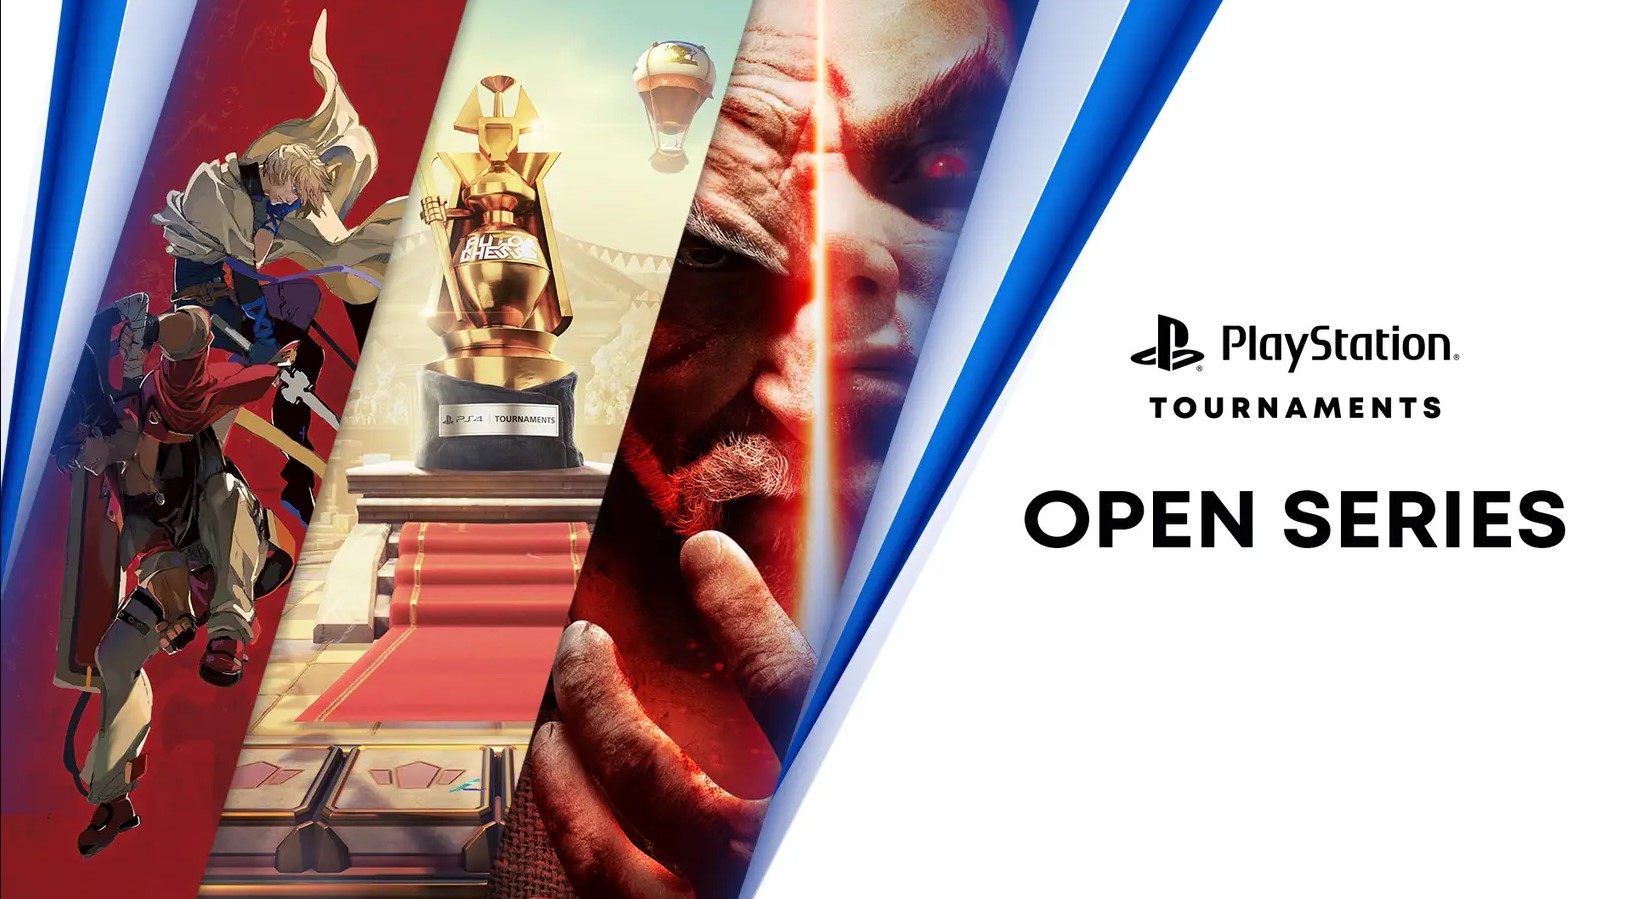 Torneos de PS4: Open Series julio 2021